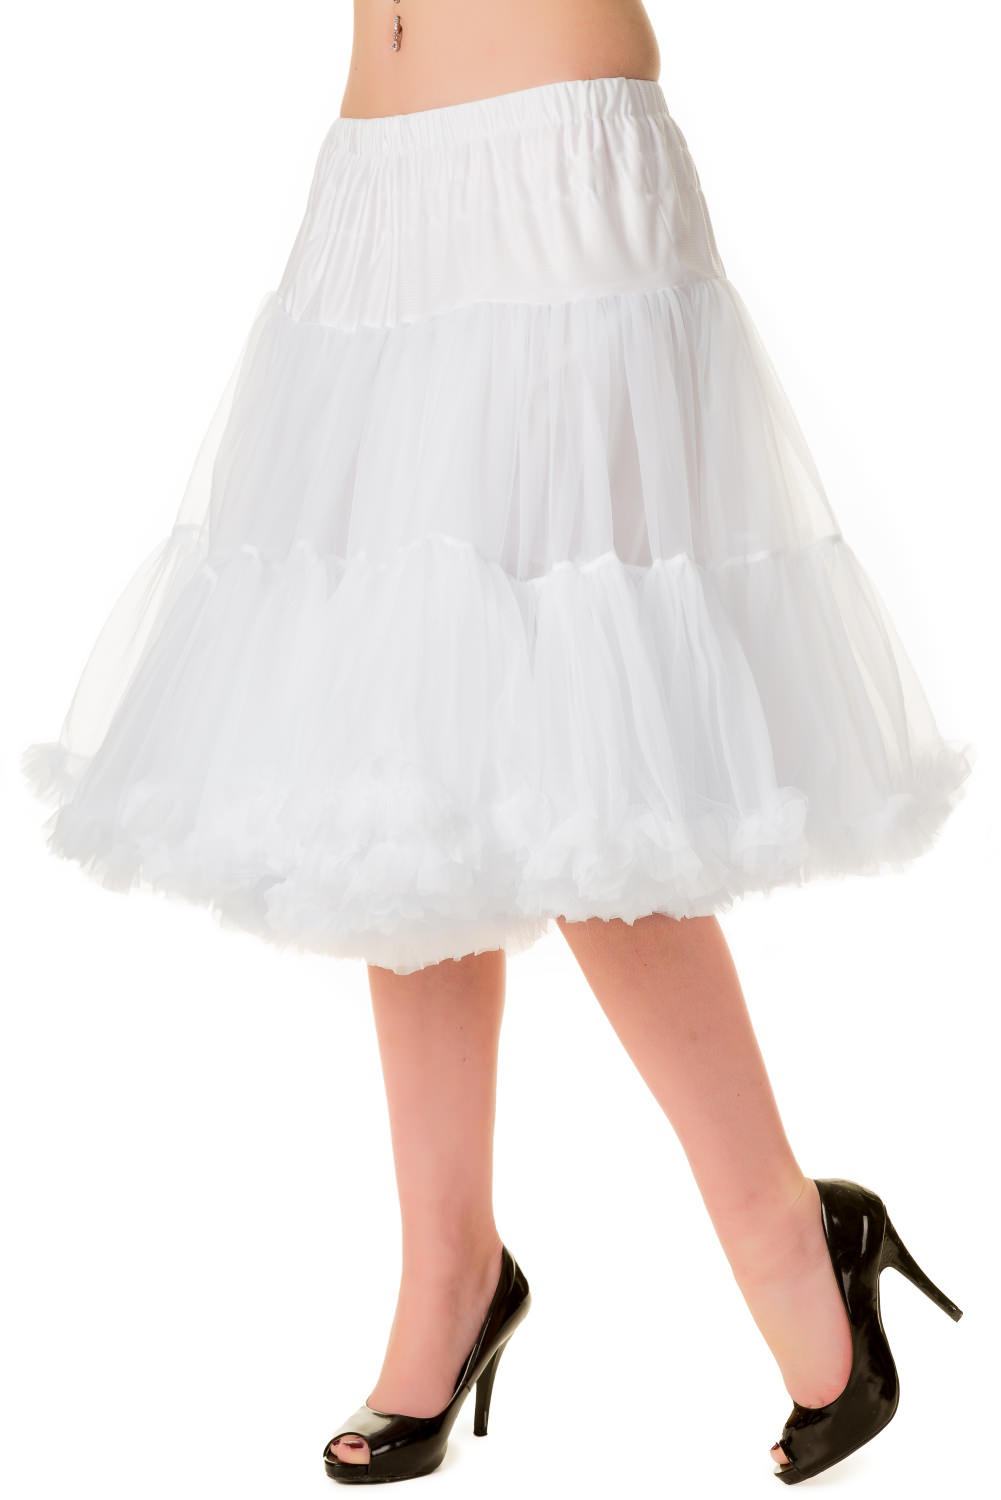 Banned SBN235 Starlite Petticoat White - Nichole Jade Rockabilly Boutique